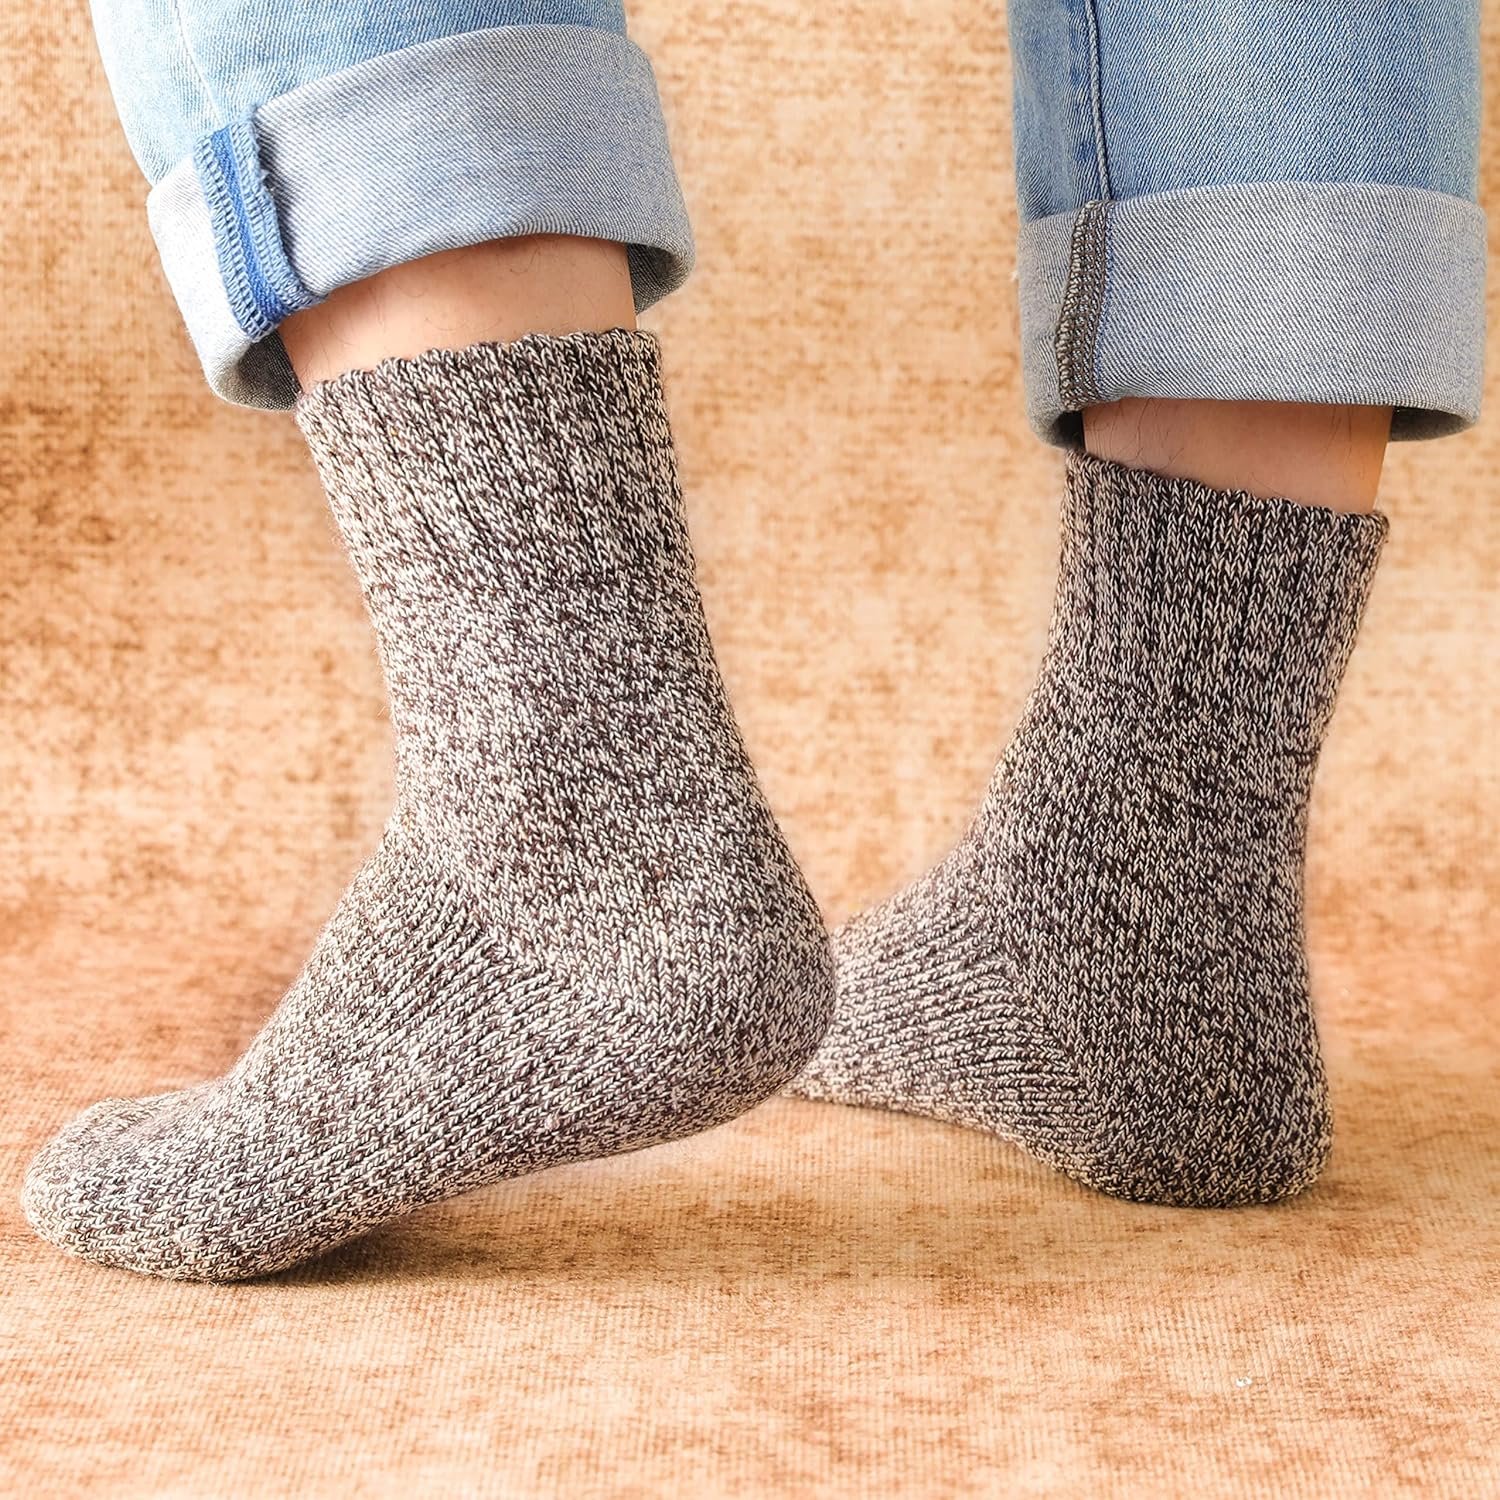 WDYHILE Wool Socks Review